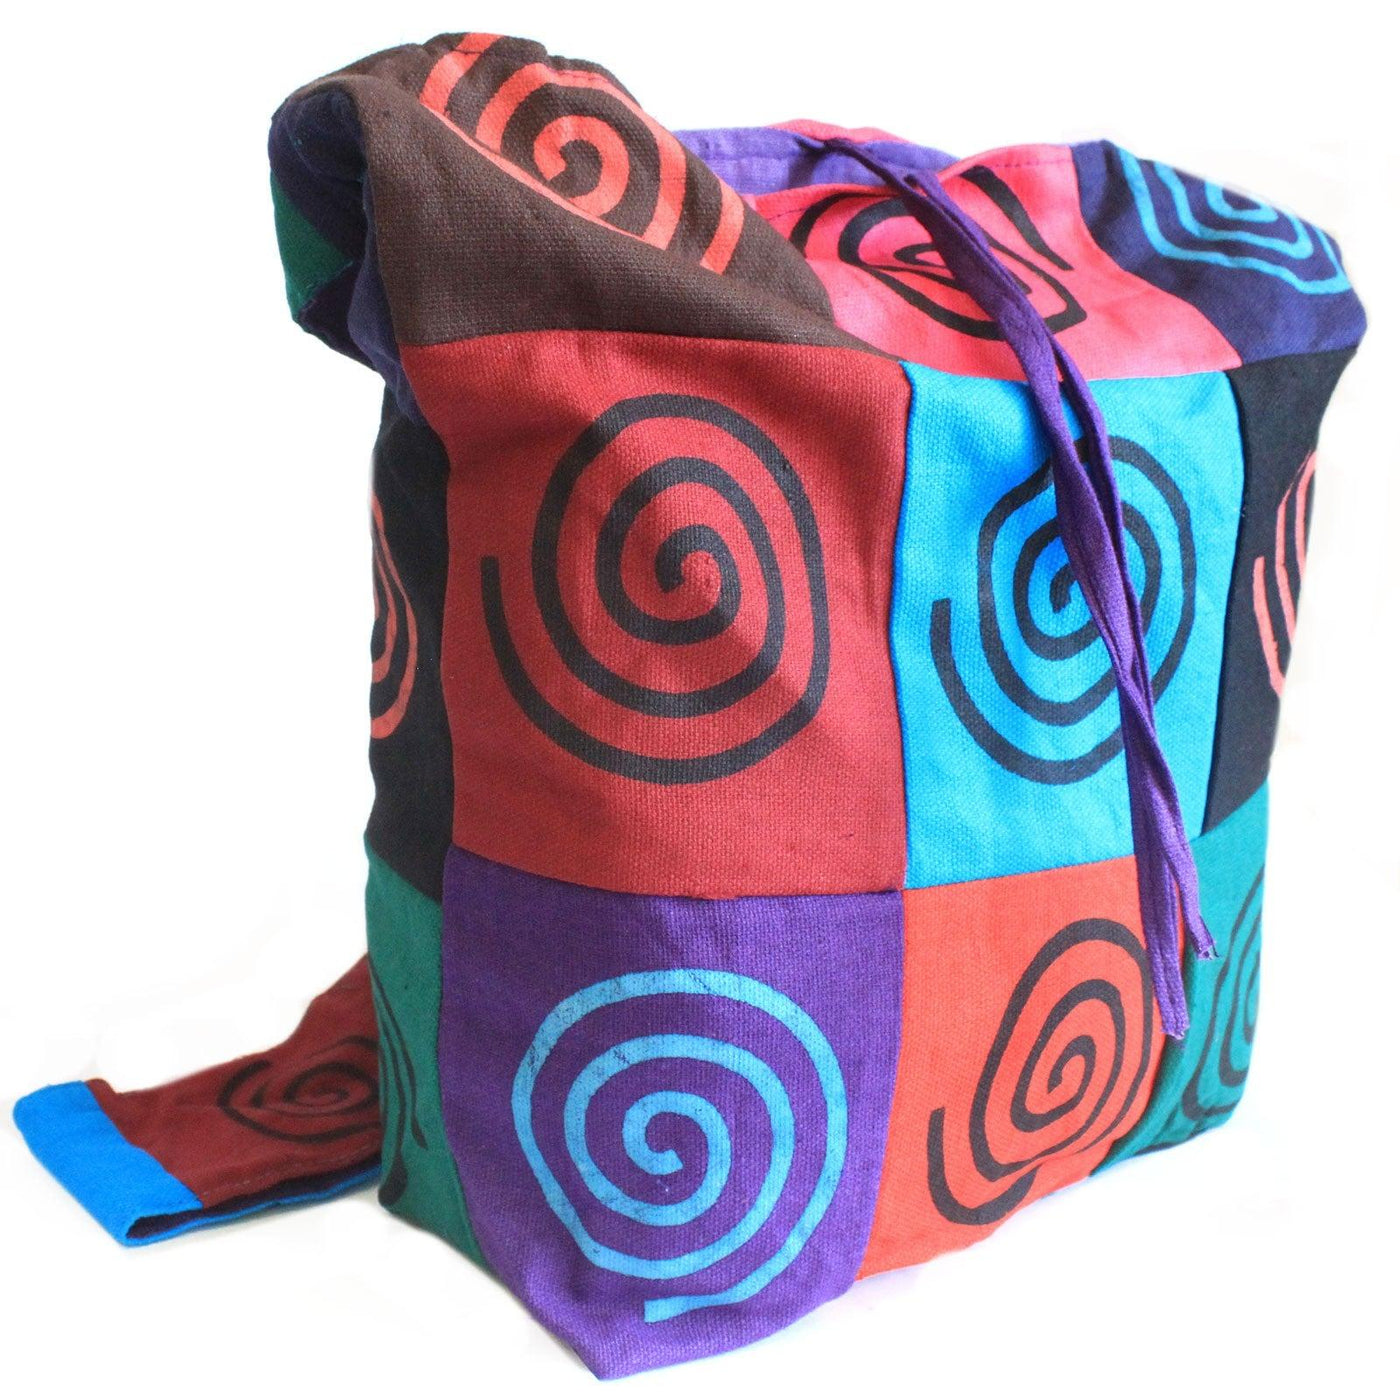 Multicolour Women's Cotton Patch Sling Handmade Yoga Bag.